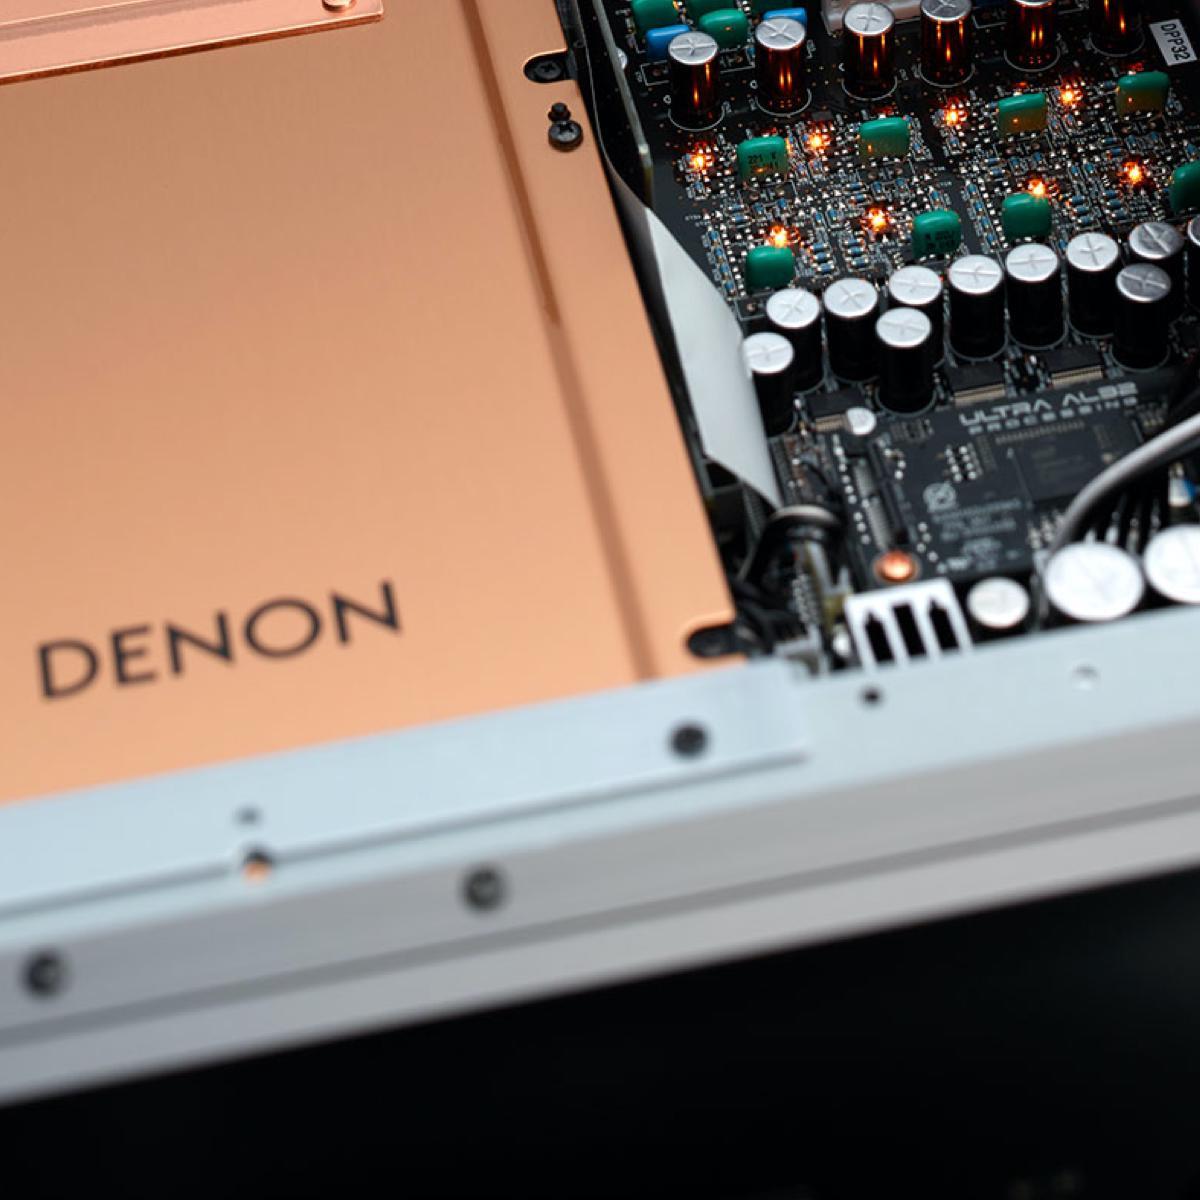 Denon DCD-A110 - SACD Player, Denon, CD Player - AVStore.in